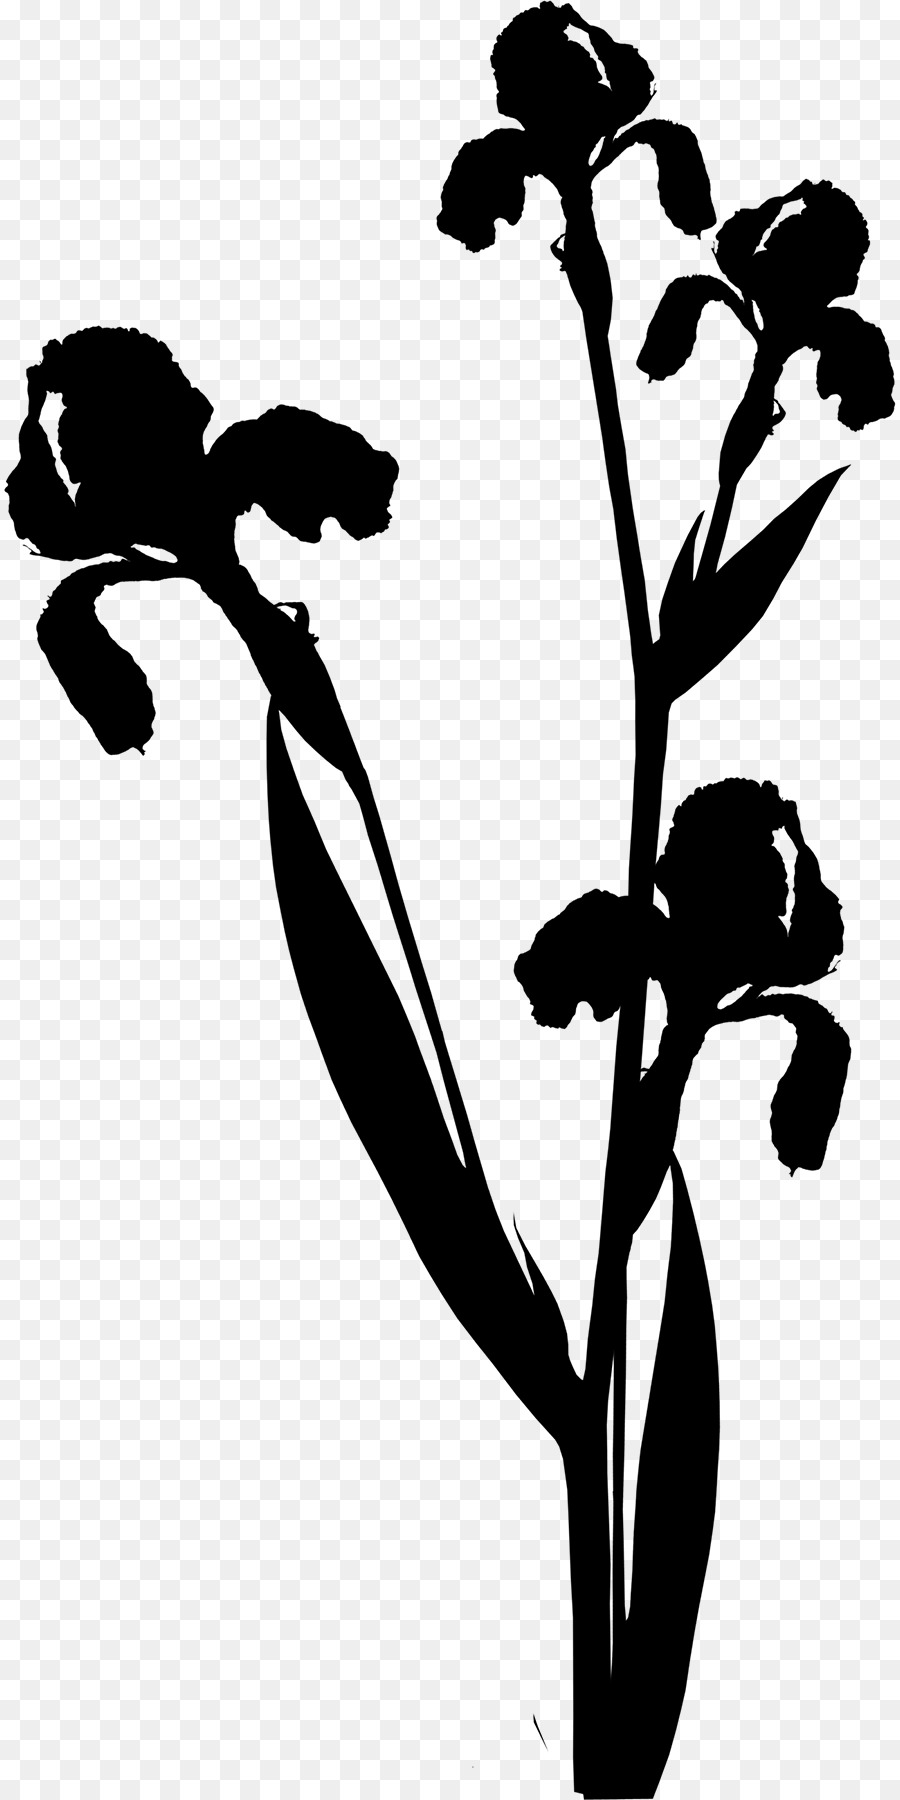 Clip art Black & White   Cây hoa lá M - 